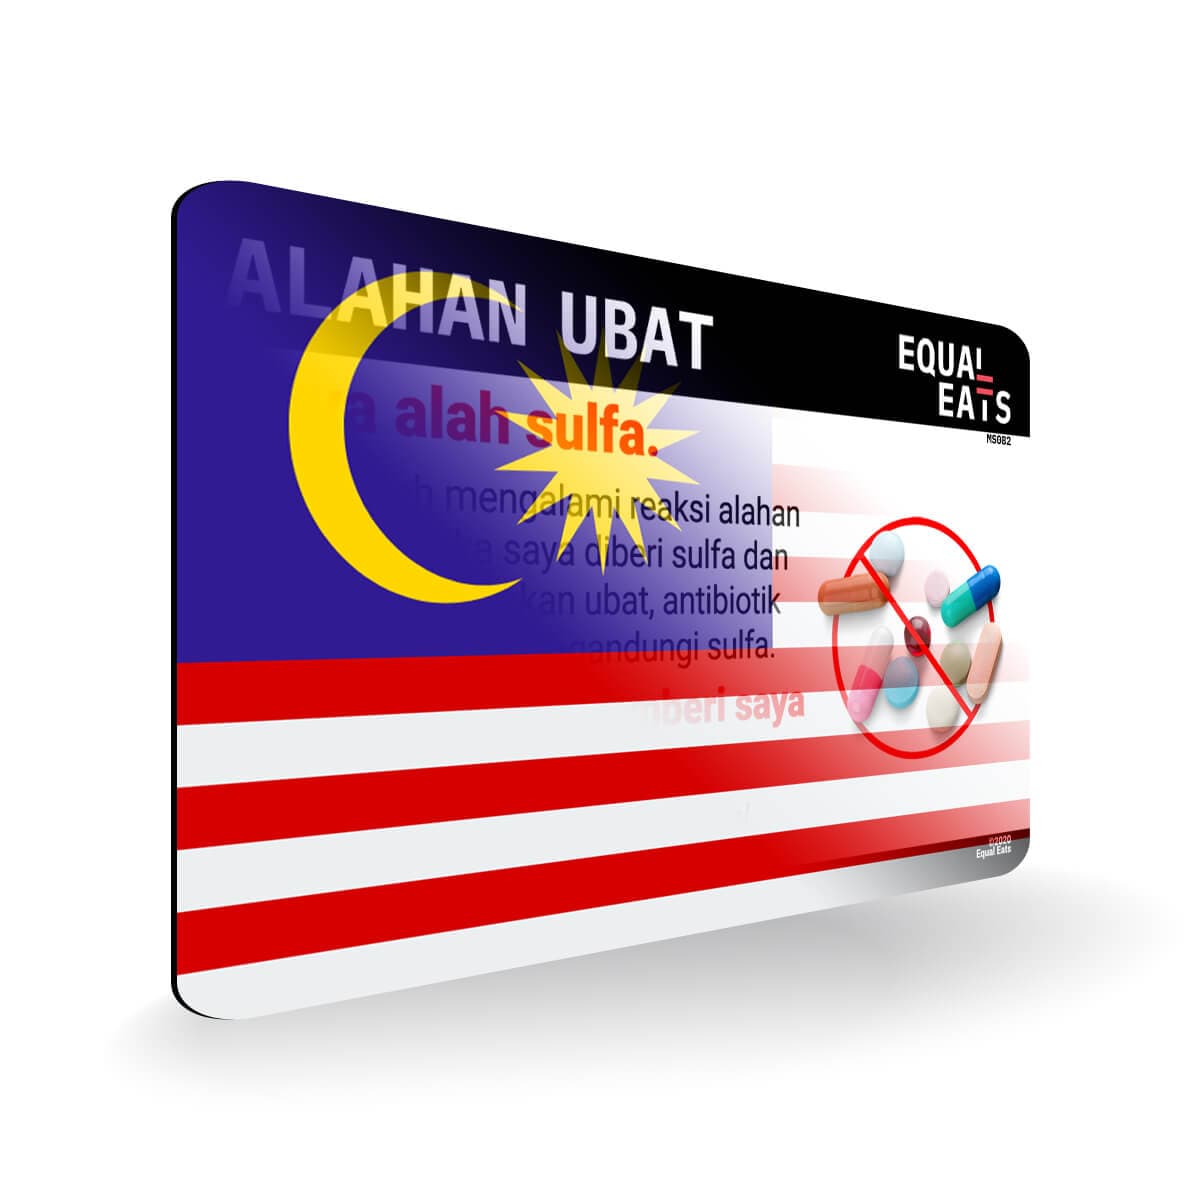 Sulfa Allergy in Malay. Sulfa Medicine Allergy Card for Malaysia